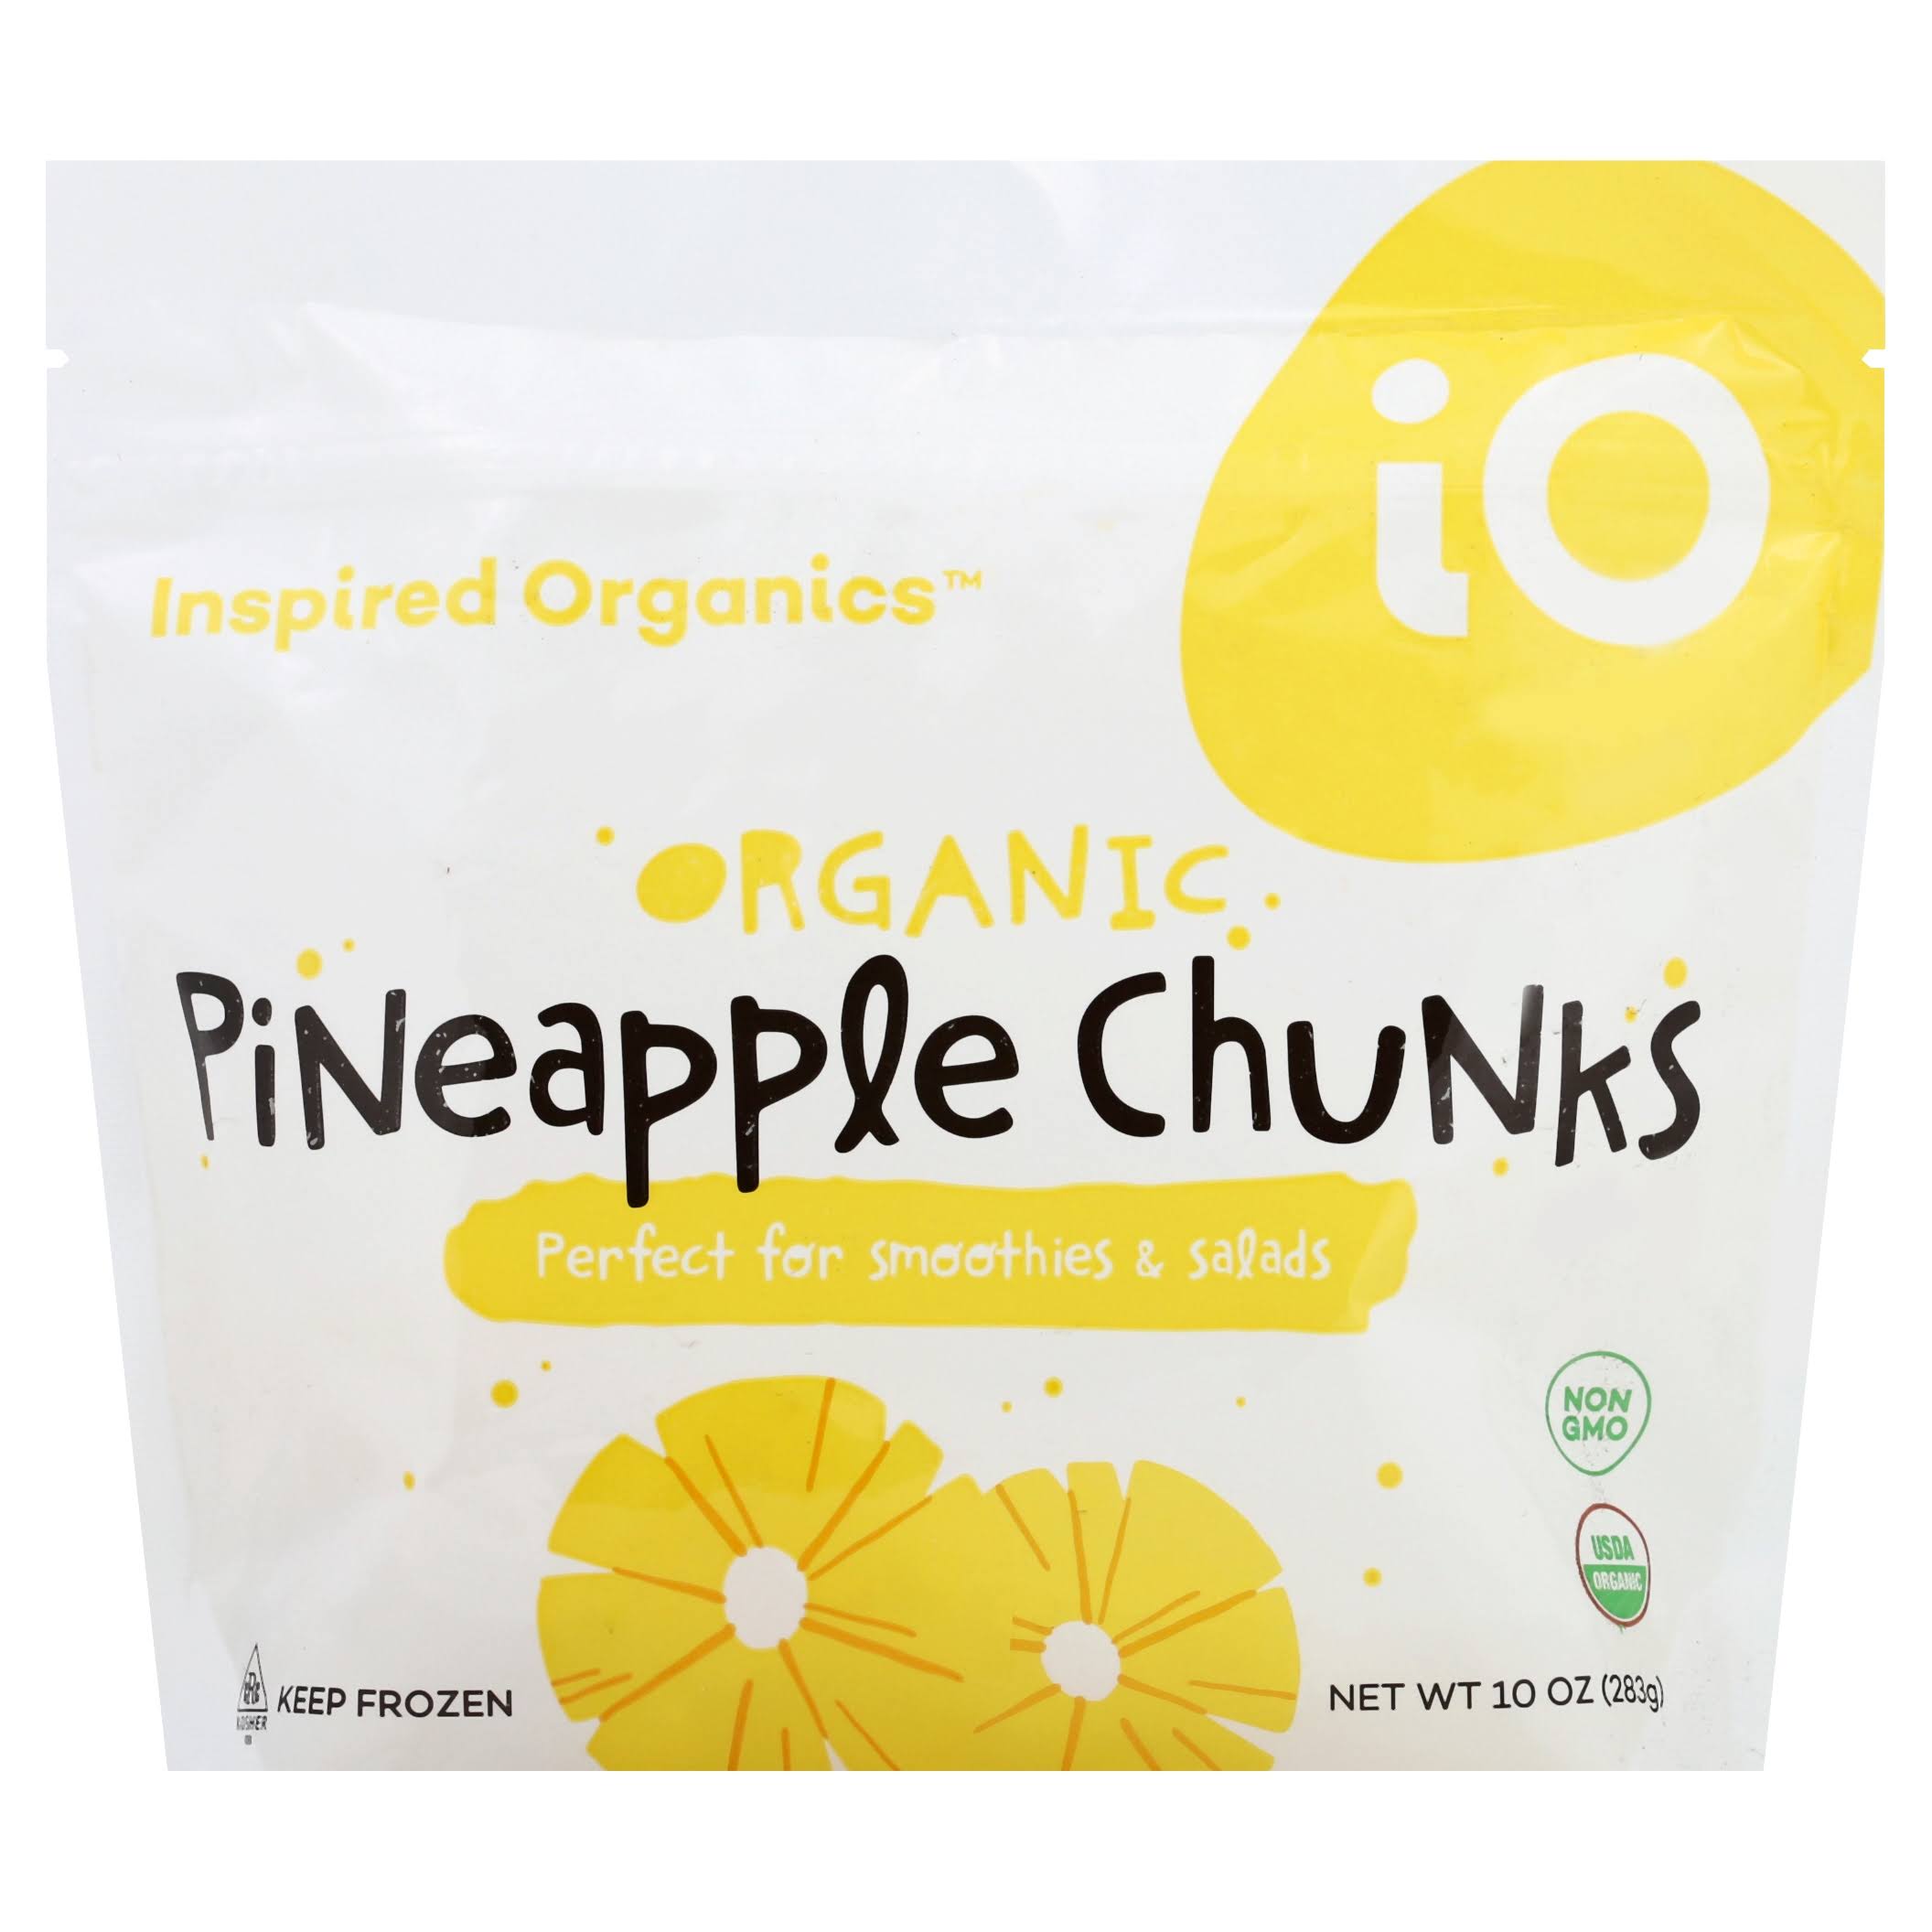 Inspired Organics Pineapple Chunks, Organic - 10 oz